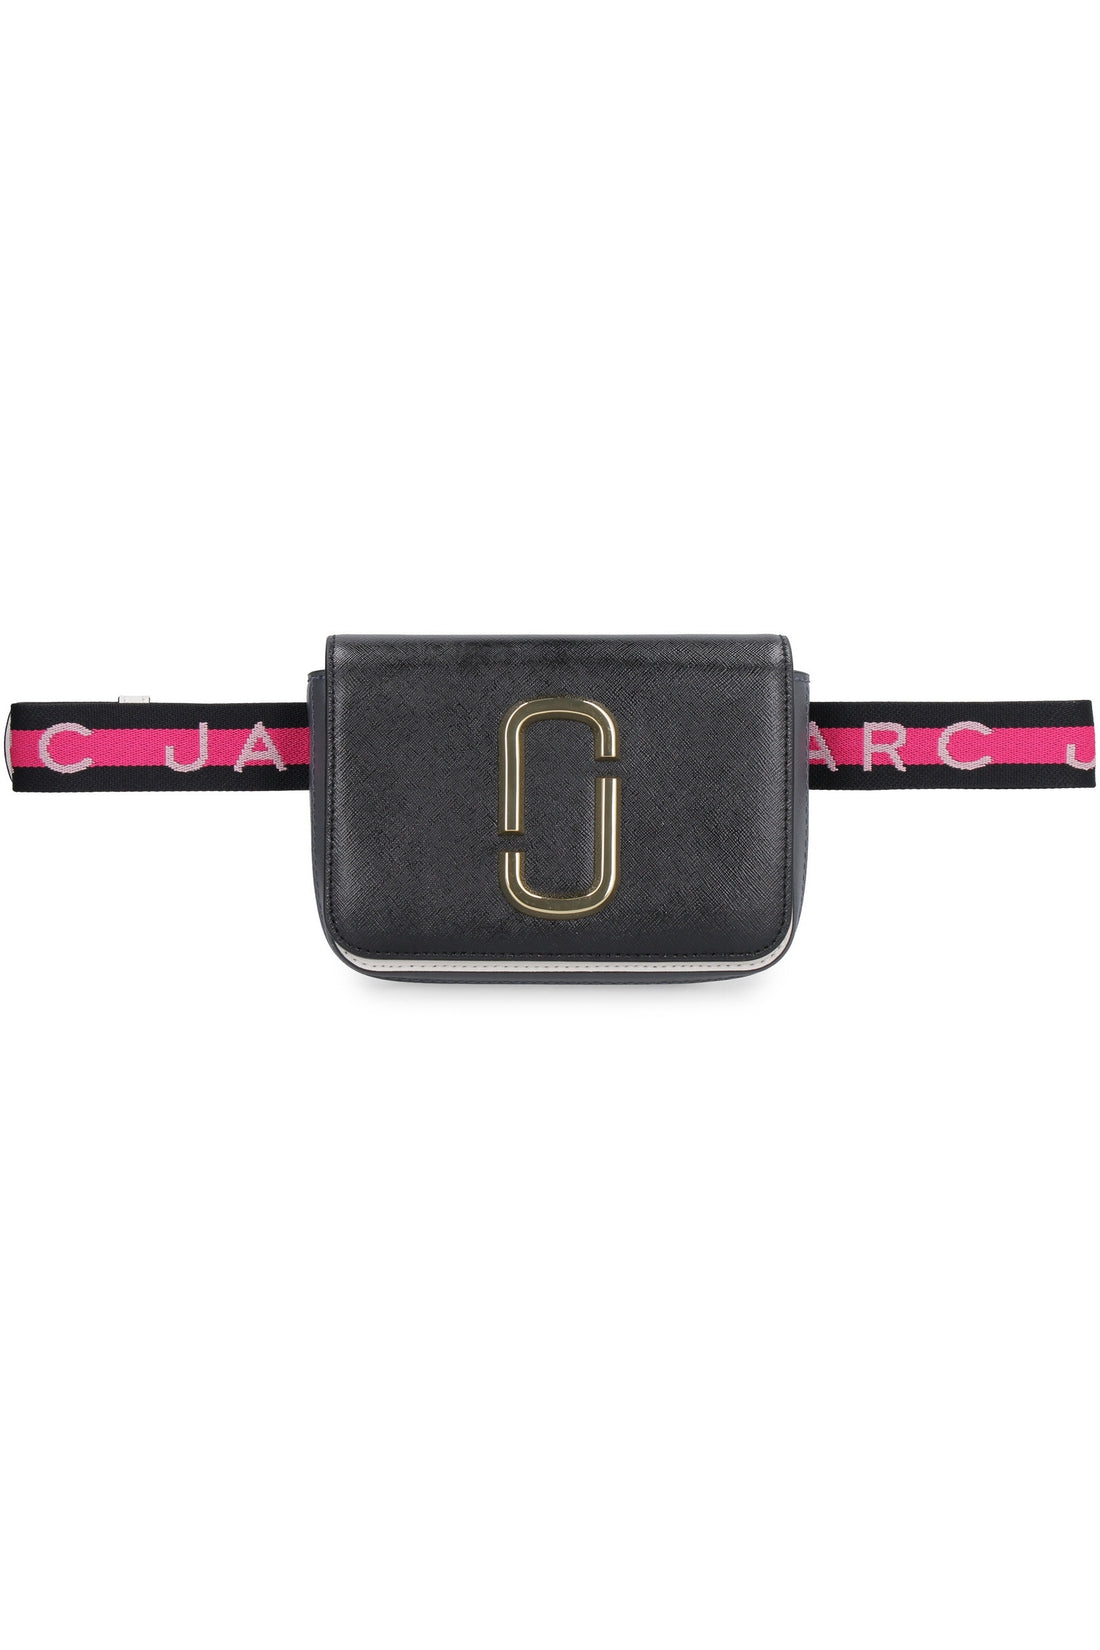 Marc Jacobs-OUTLET-SALE-Hip Shot leather belt bag with logo-ARCHIVIST